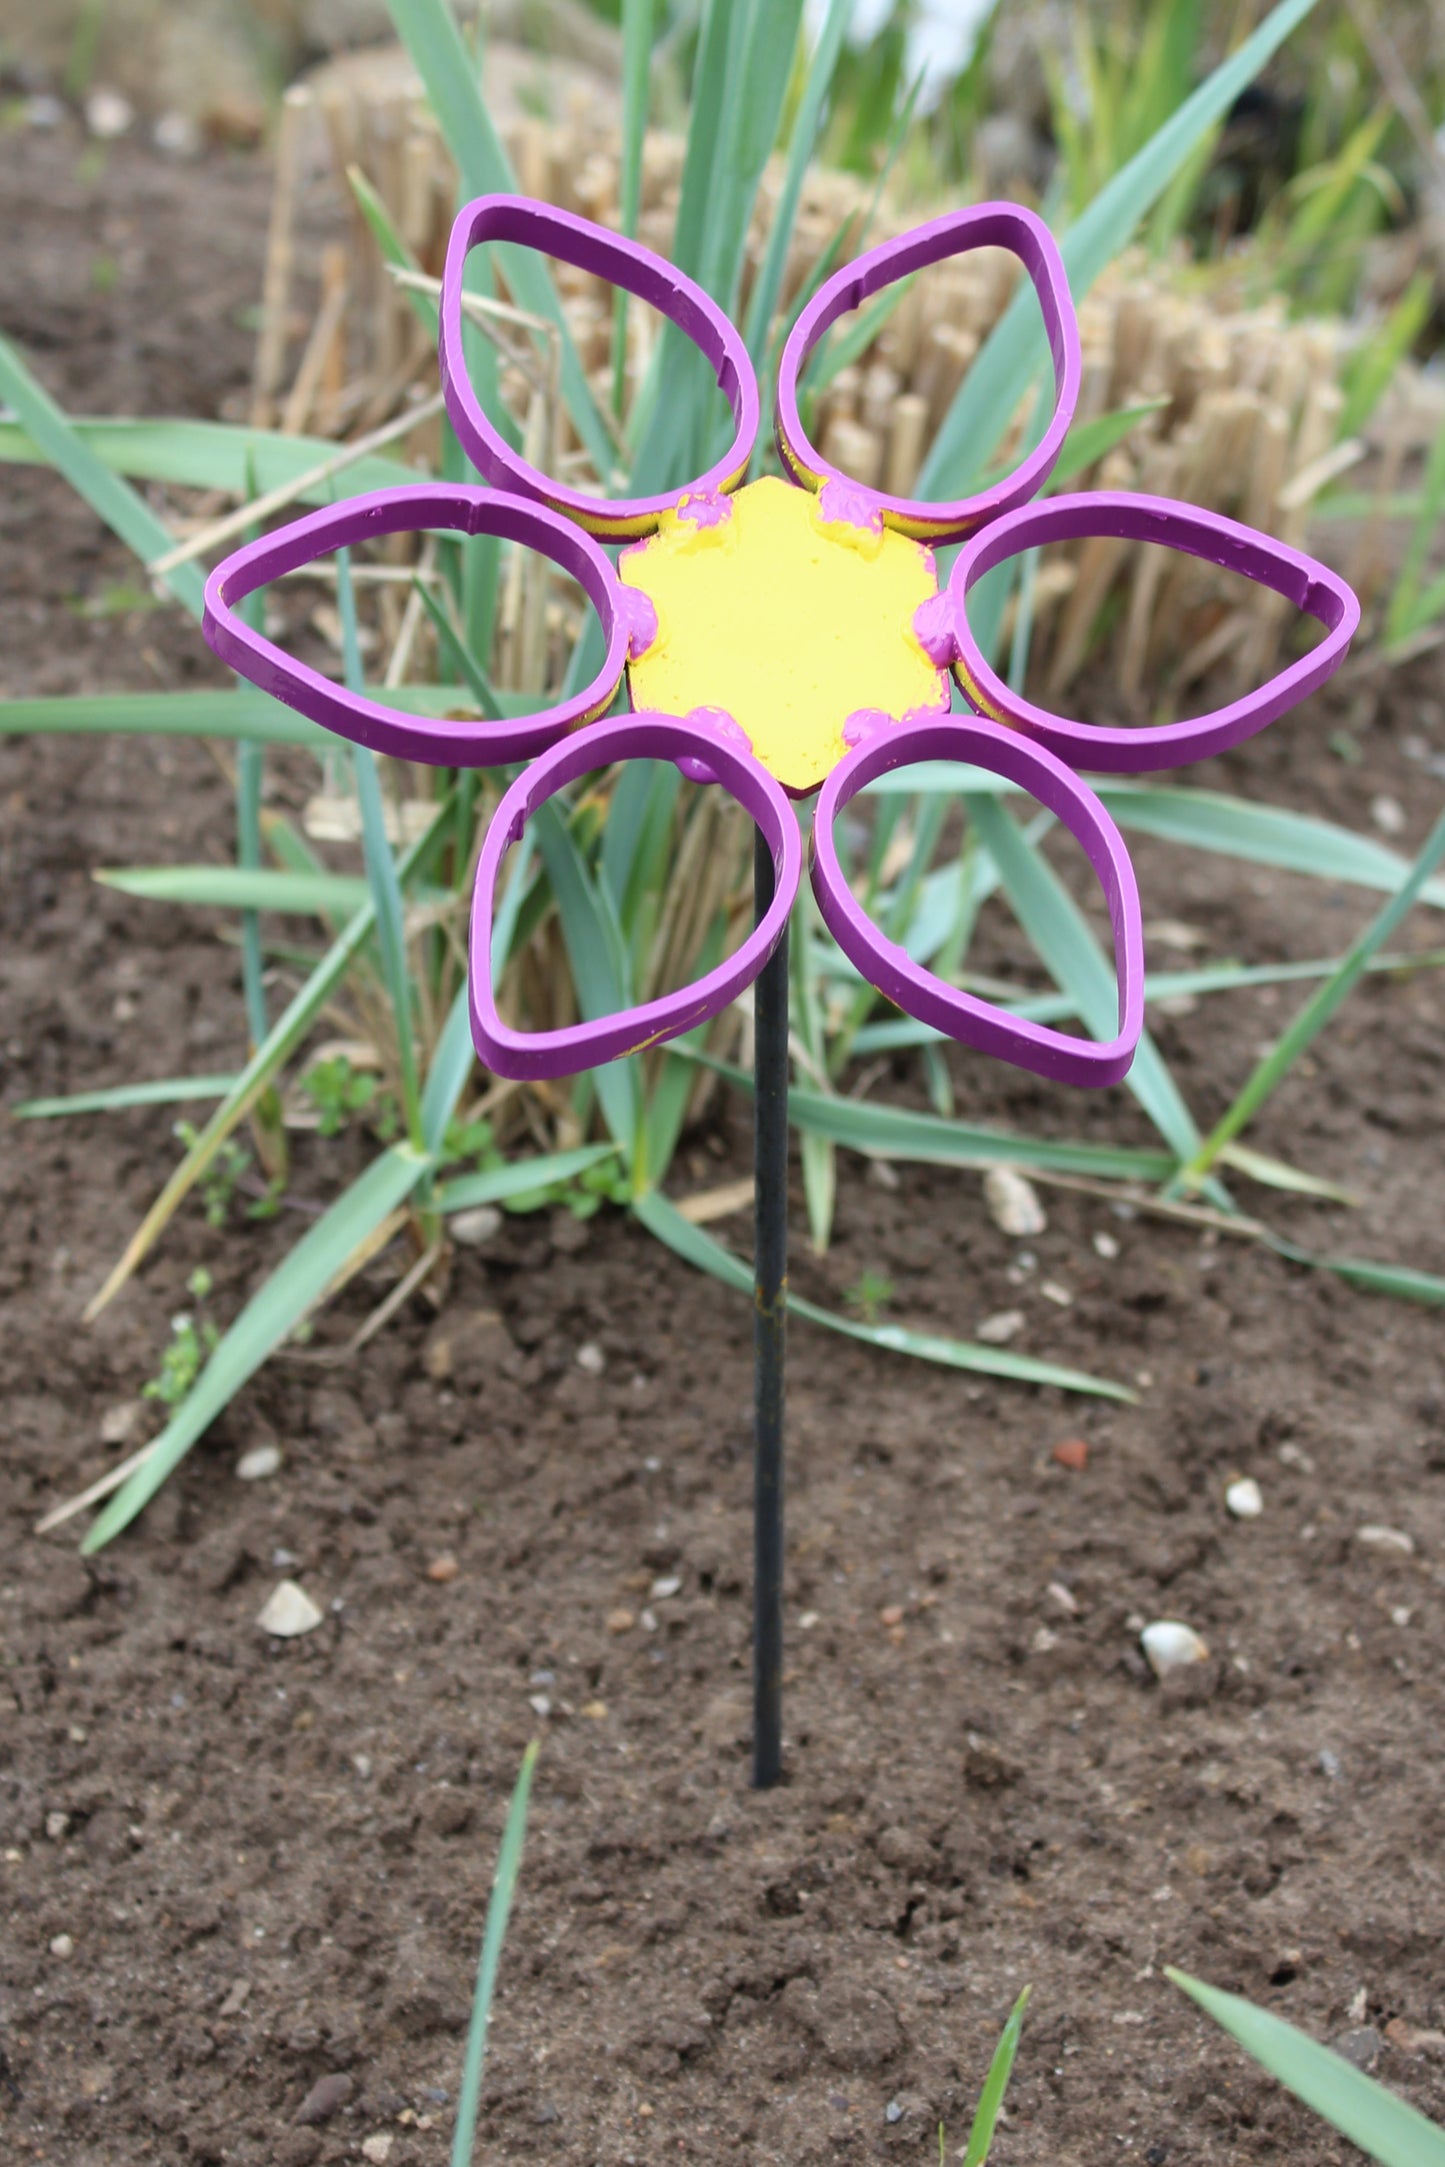 Metal blomst på spyd - lilla og gul